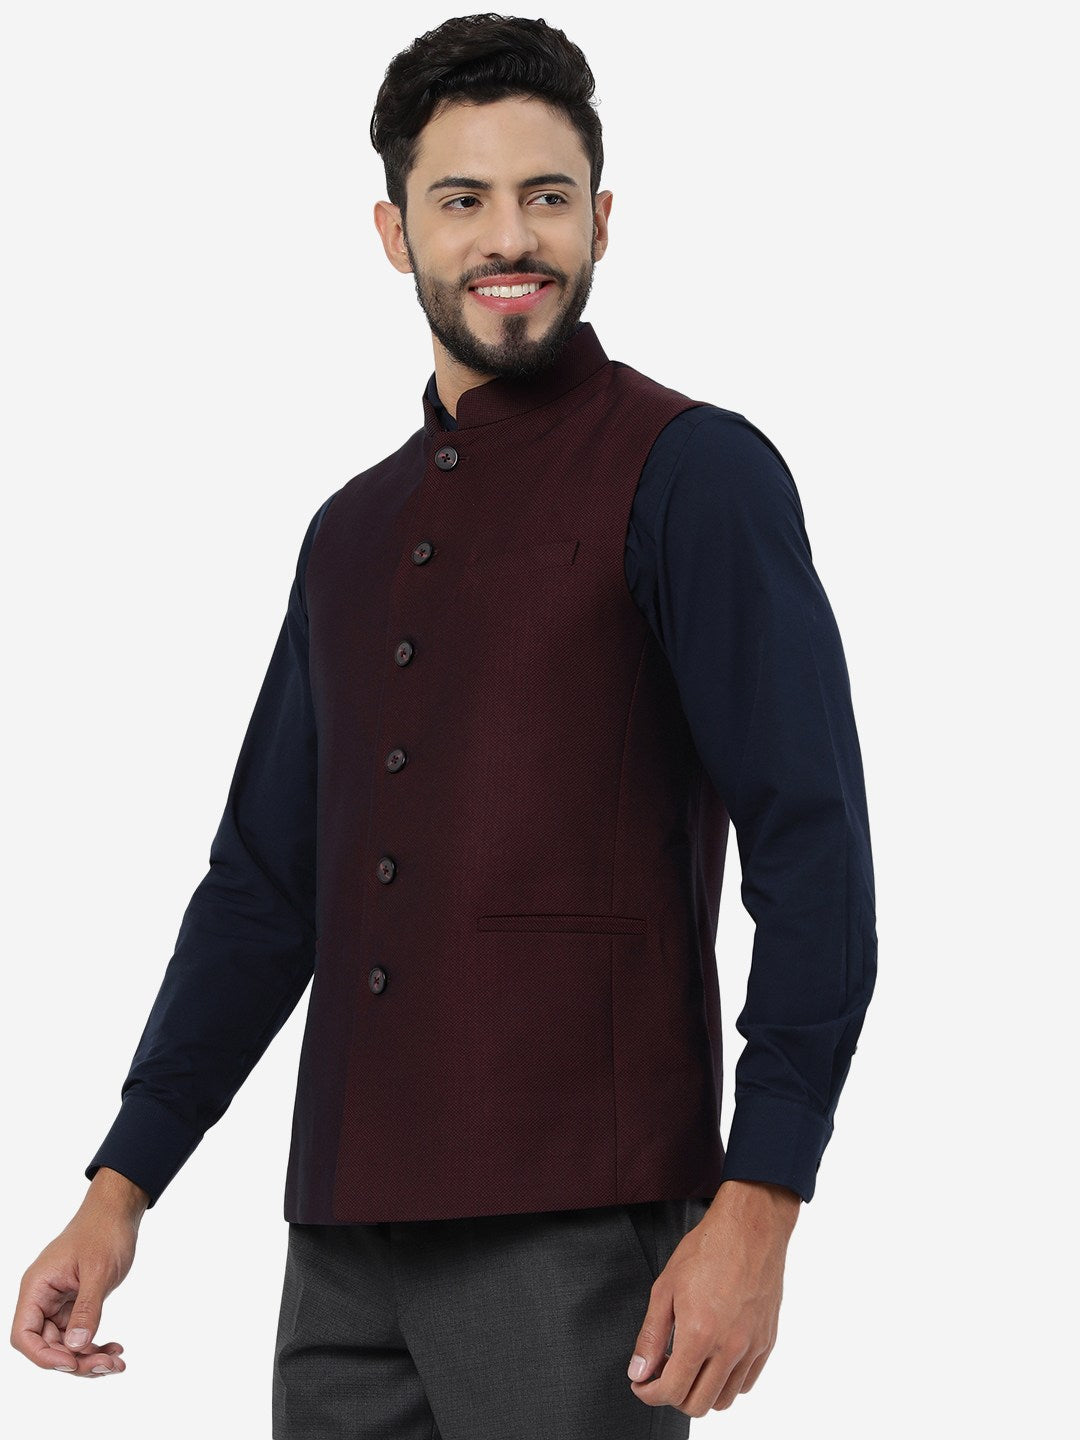 Buy Peach Color Ethnic Nehru Jacket with Maroon Kurta Set for Men